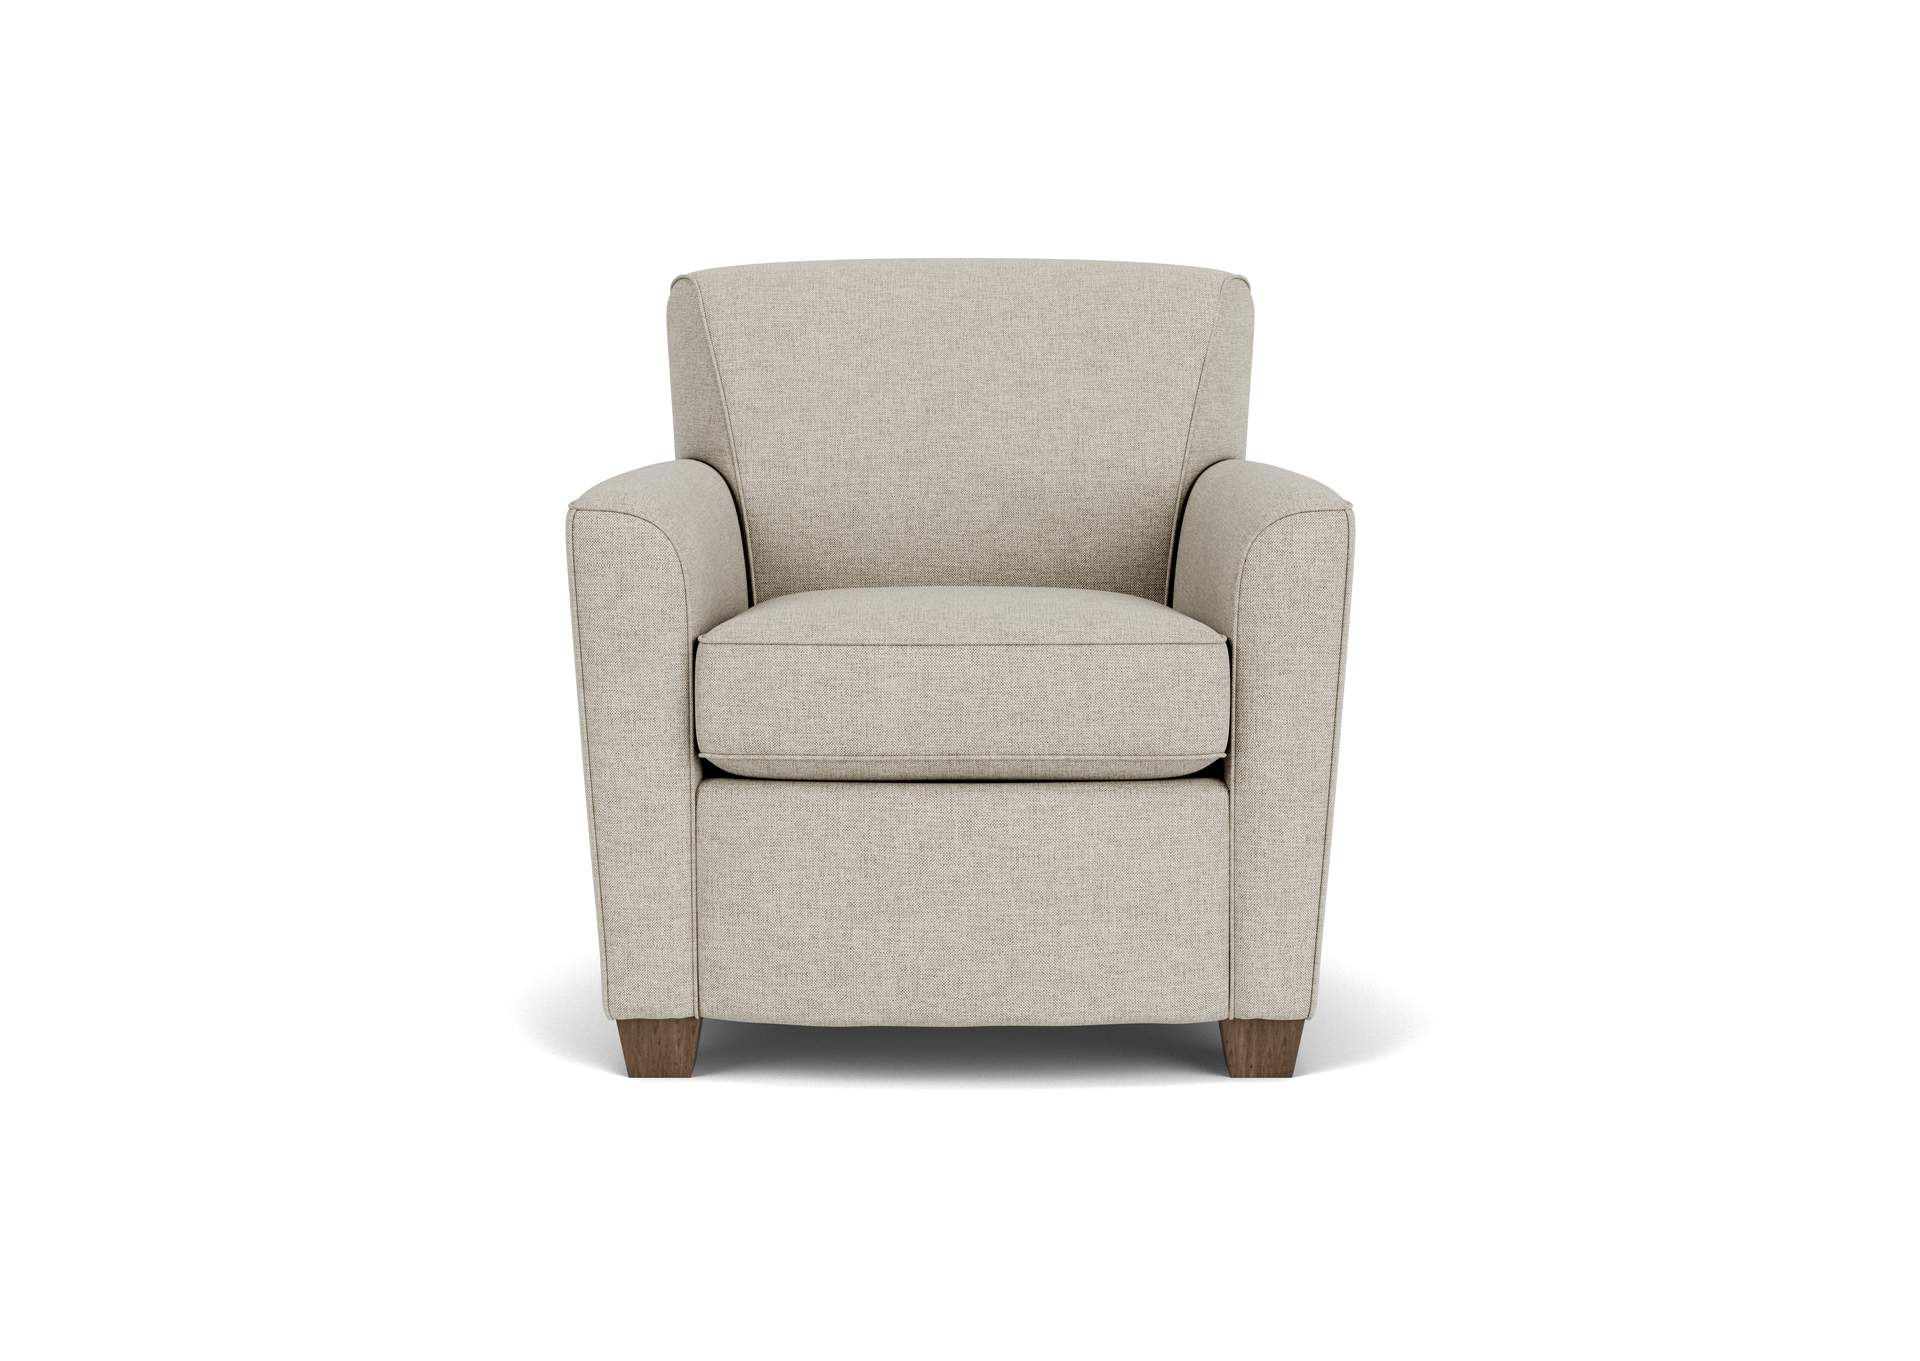 Kingman Chair,Flexsteel